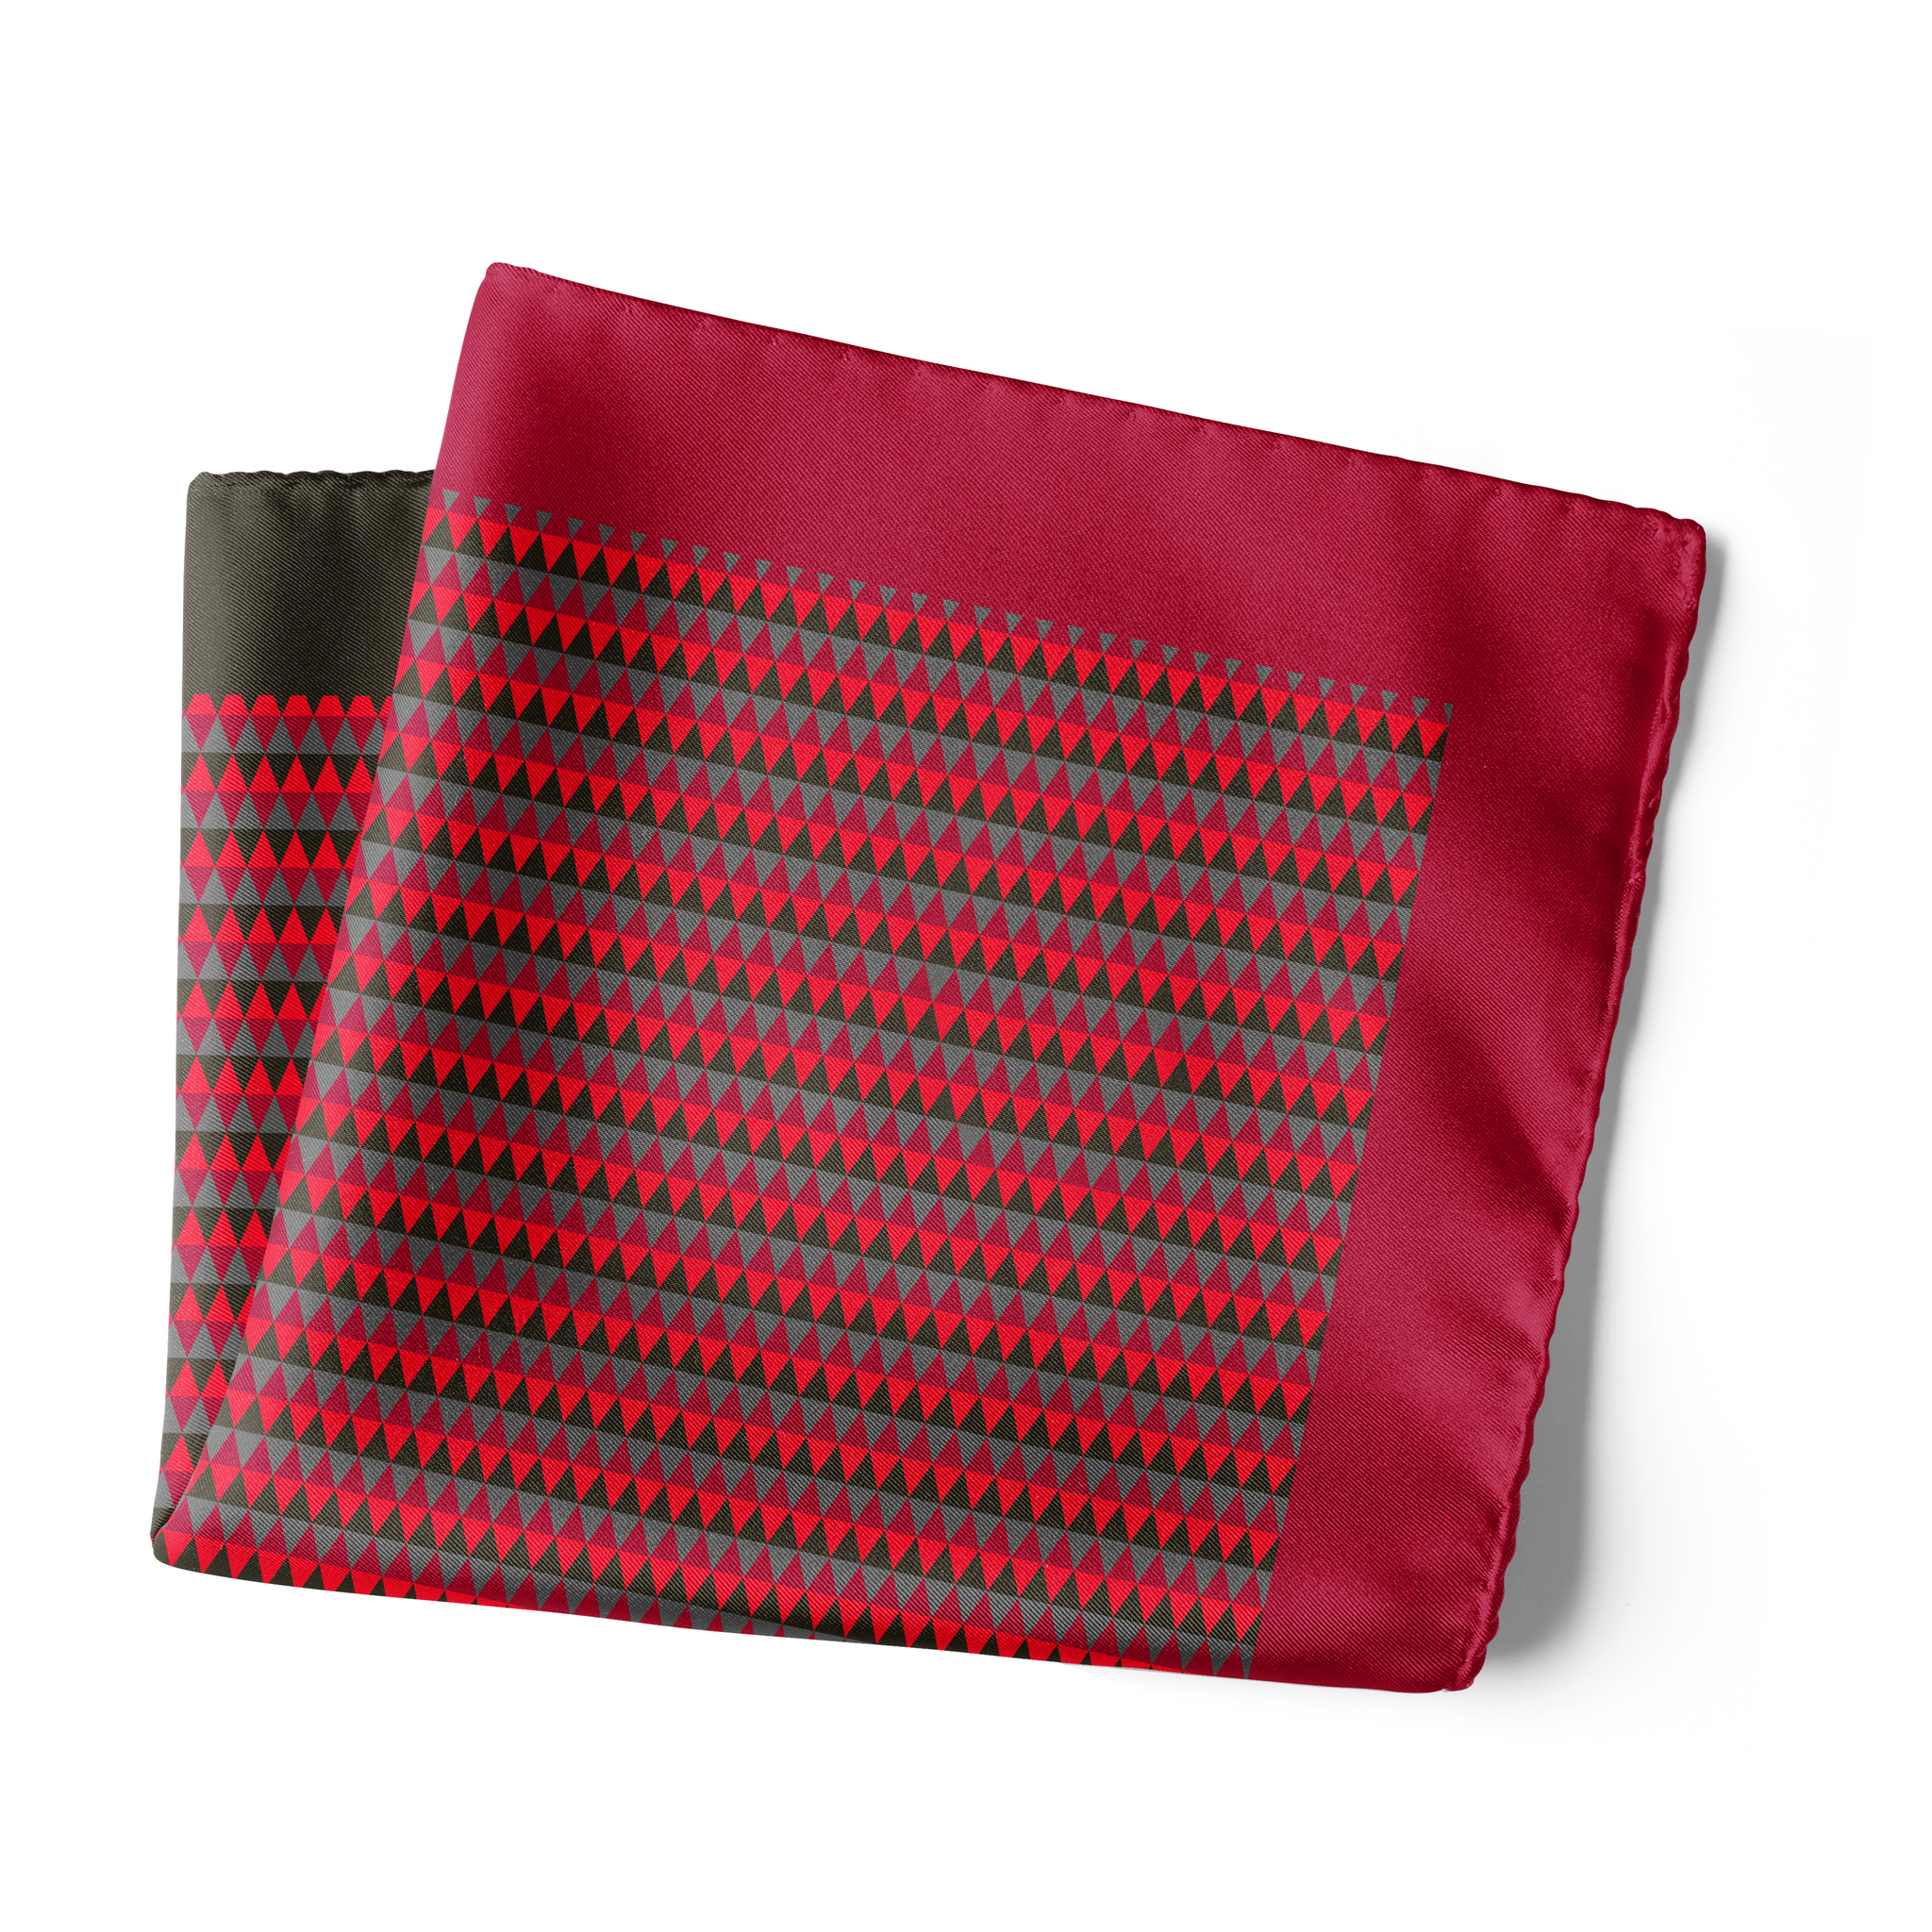 Chokore Black & Red Silk Pocket Square from the Plaids line